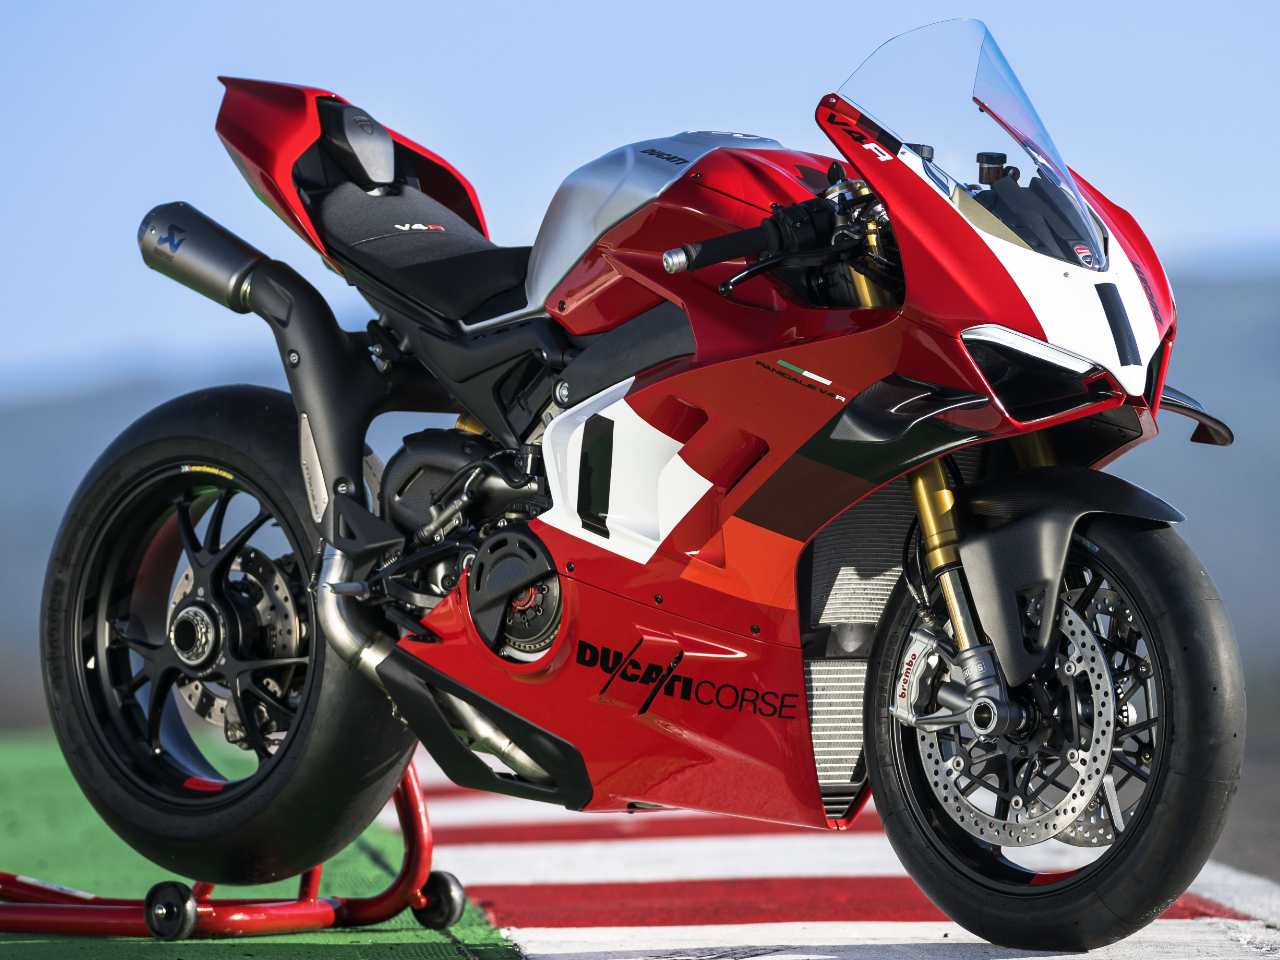 A nova moto Ducati de mais de 240 cavalos pronta para desembarcar